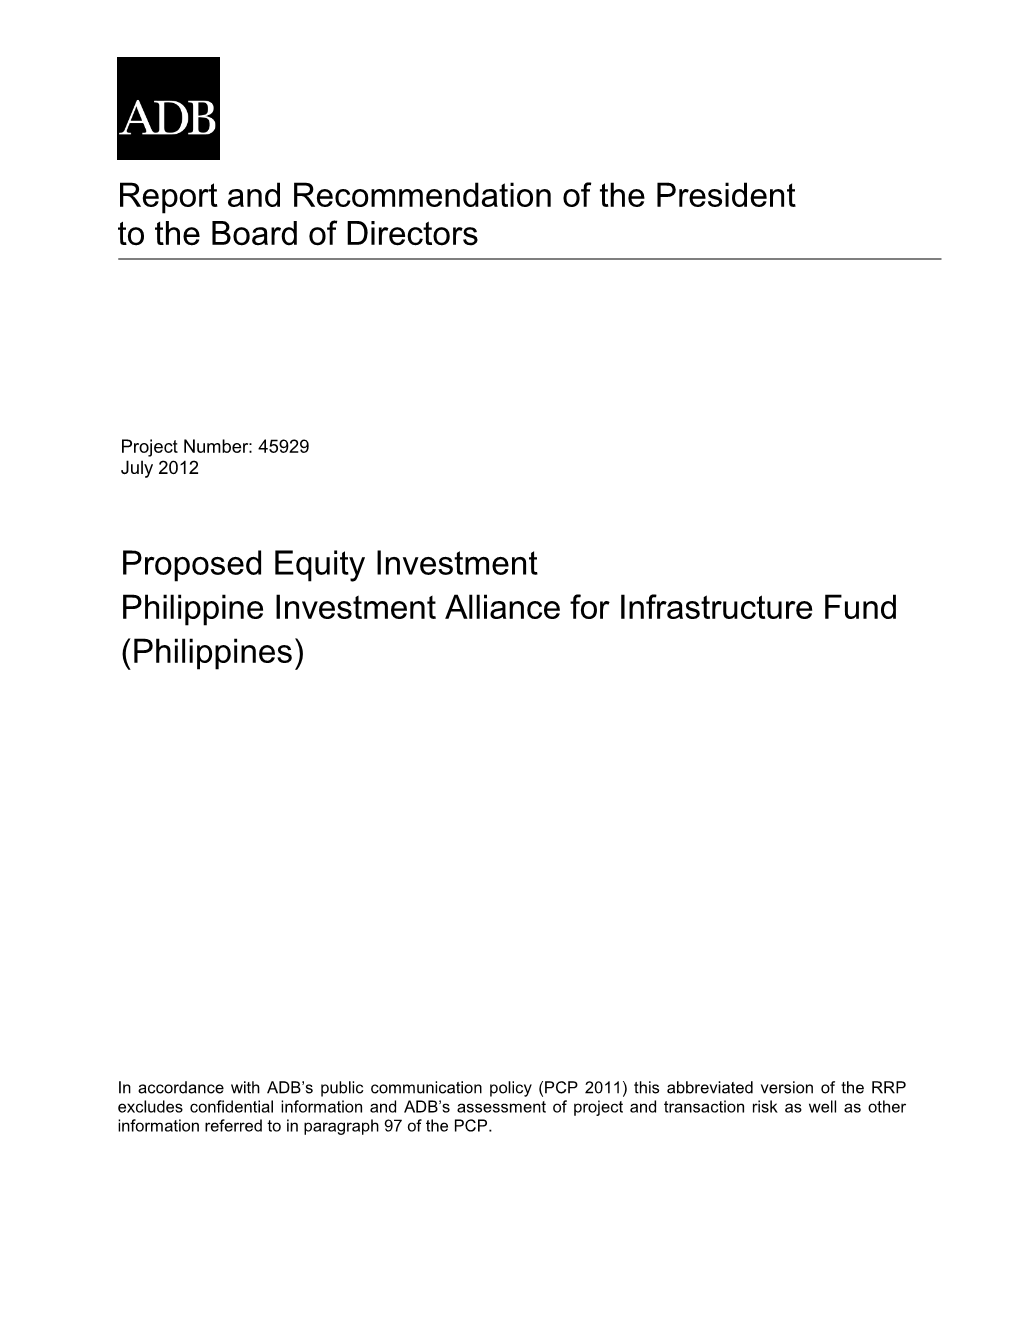 Philippine Investment Alliance for Infrastructure Fund (Philippines)